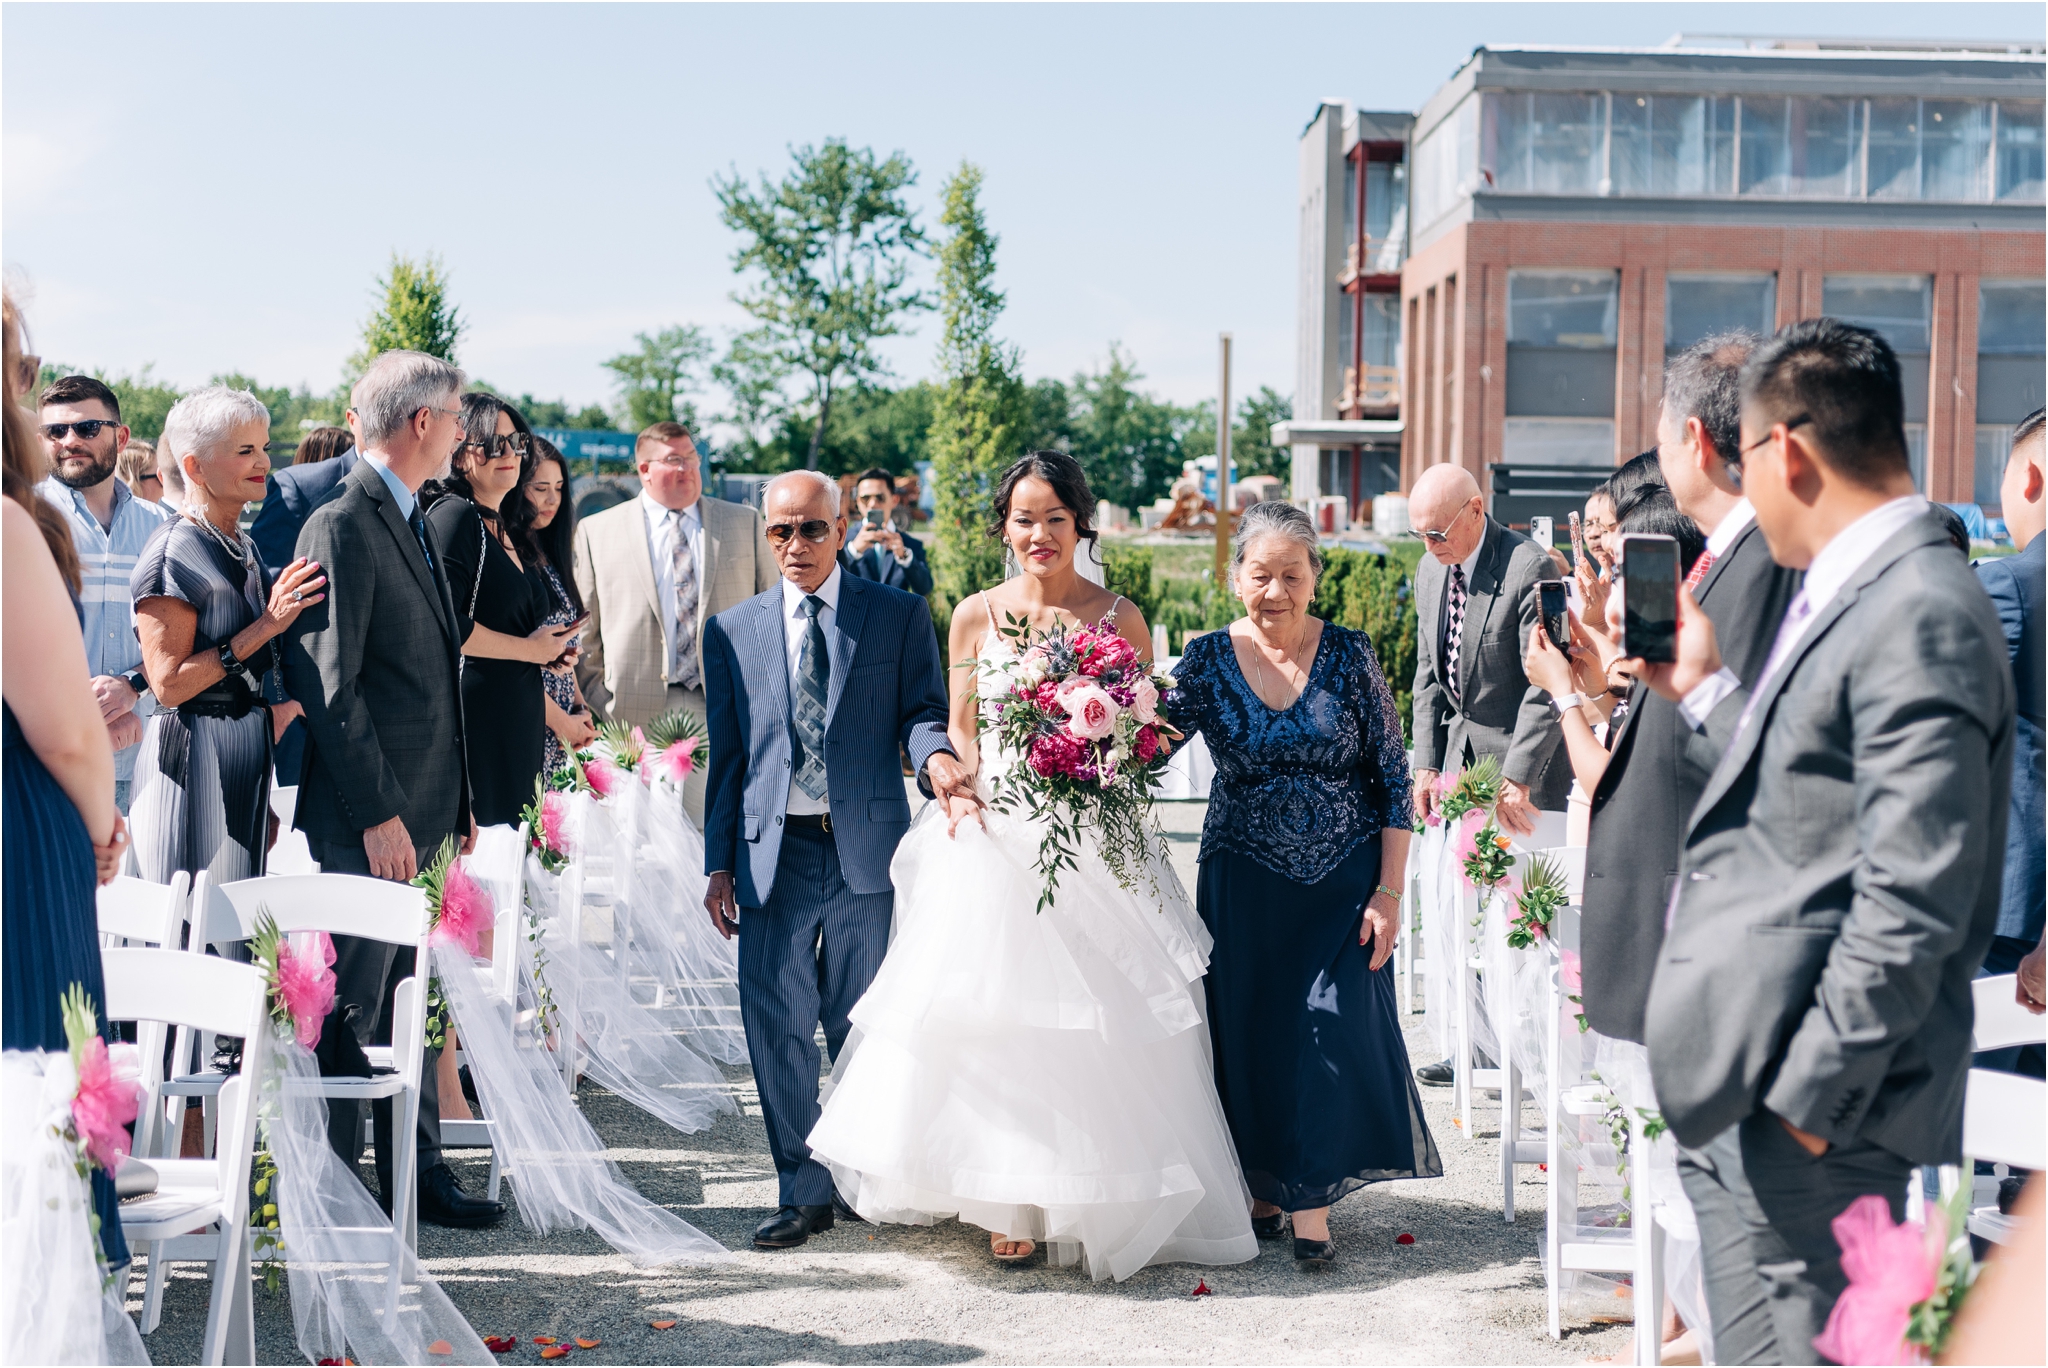 Ritz Charles outdoor wedding ceremony